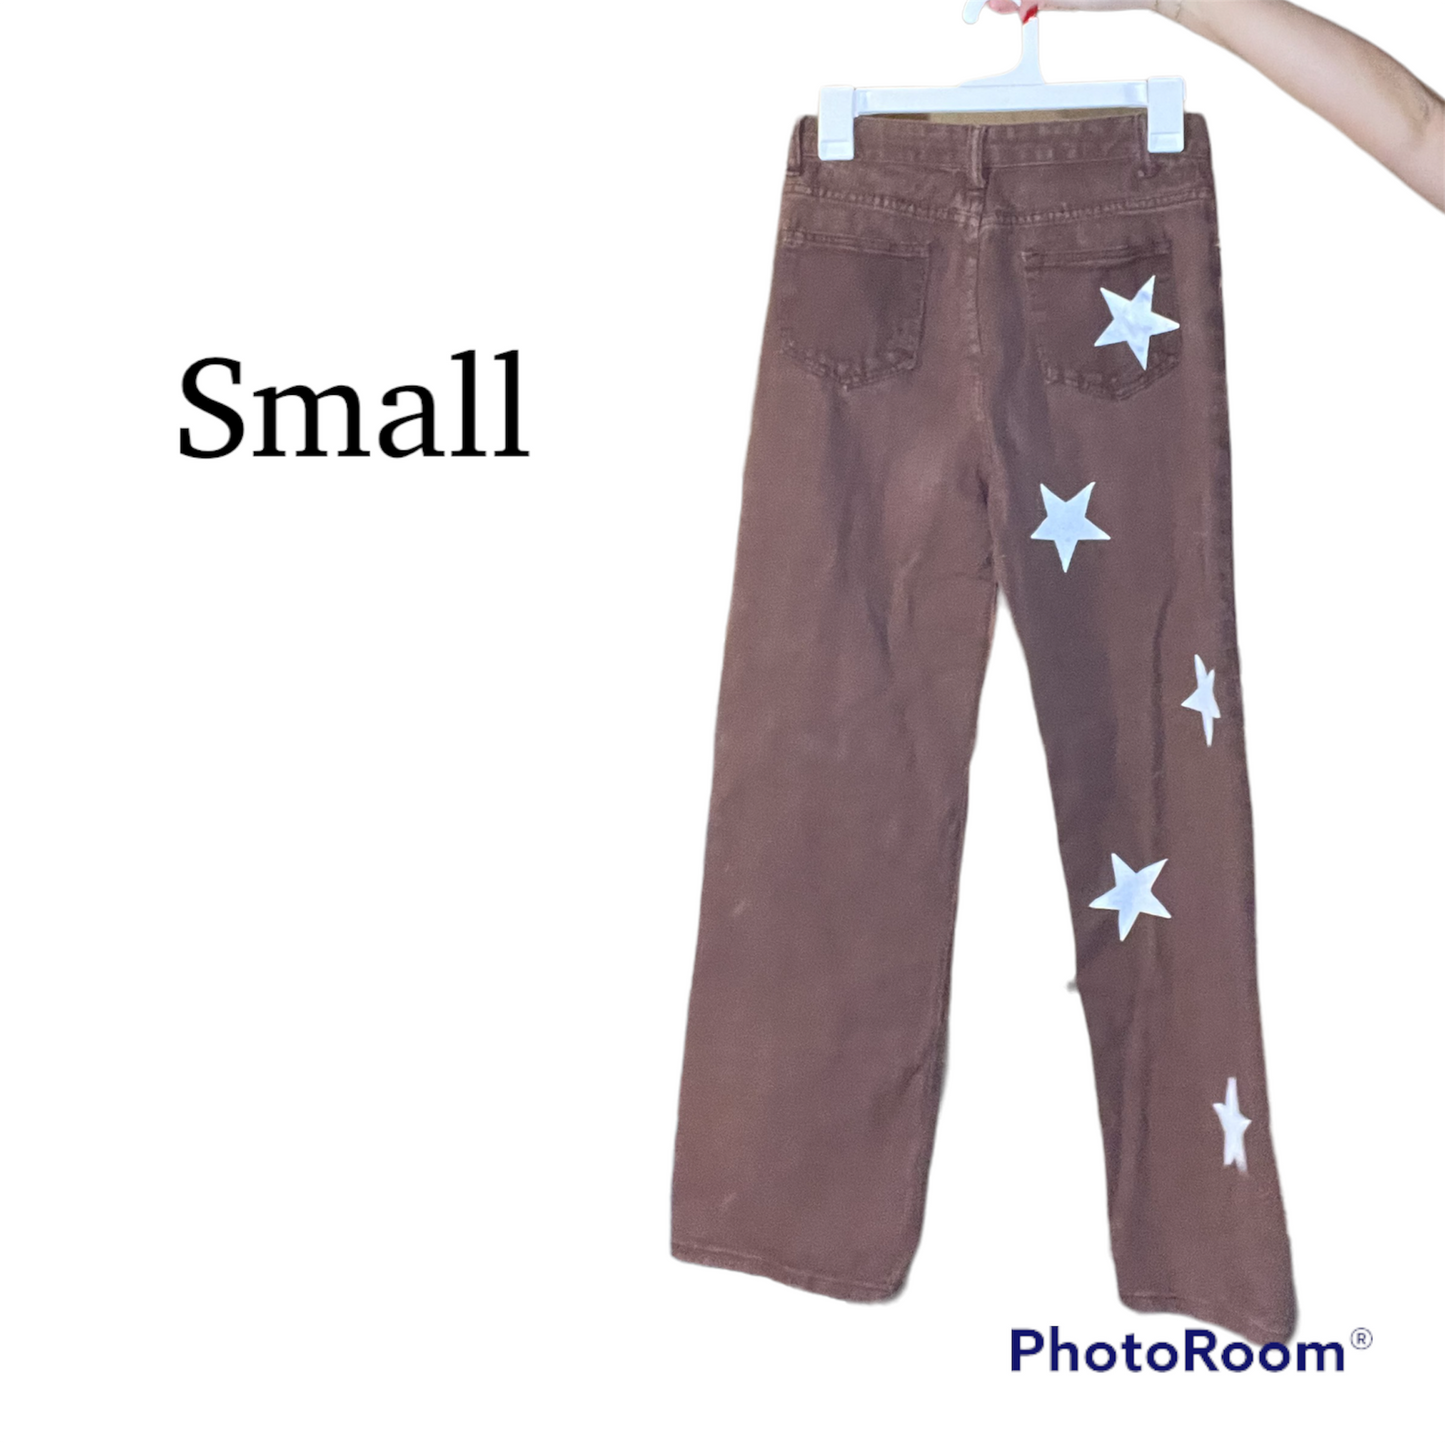 Brown star pants